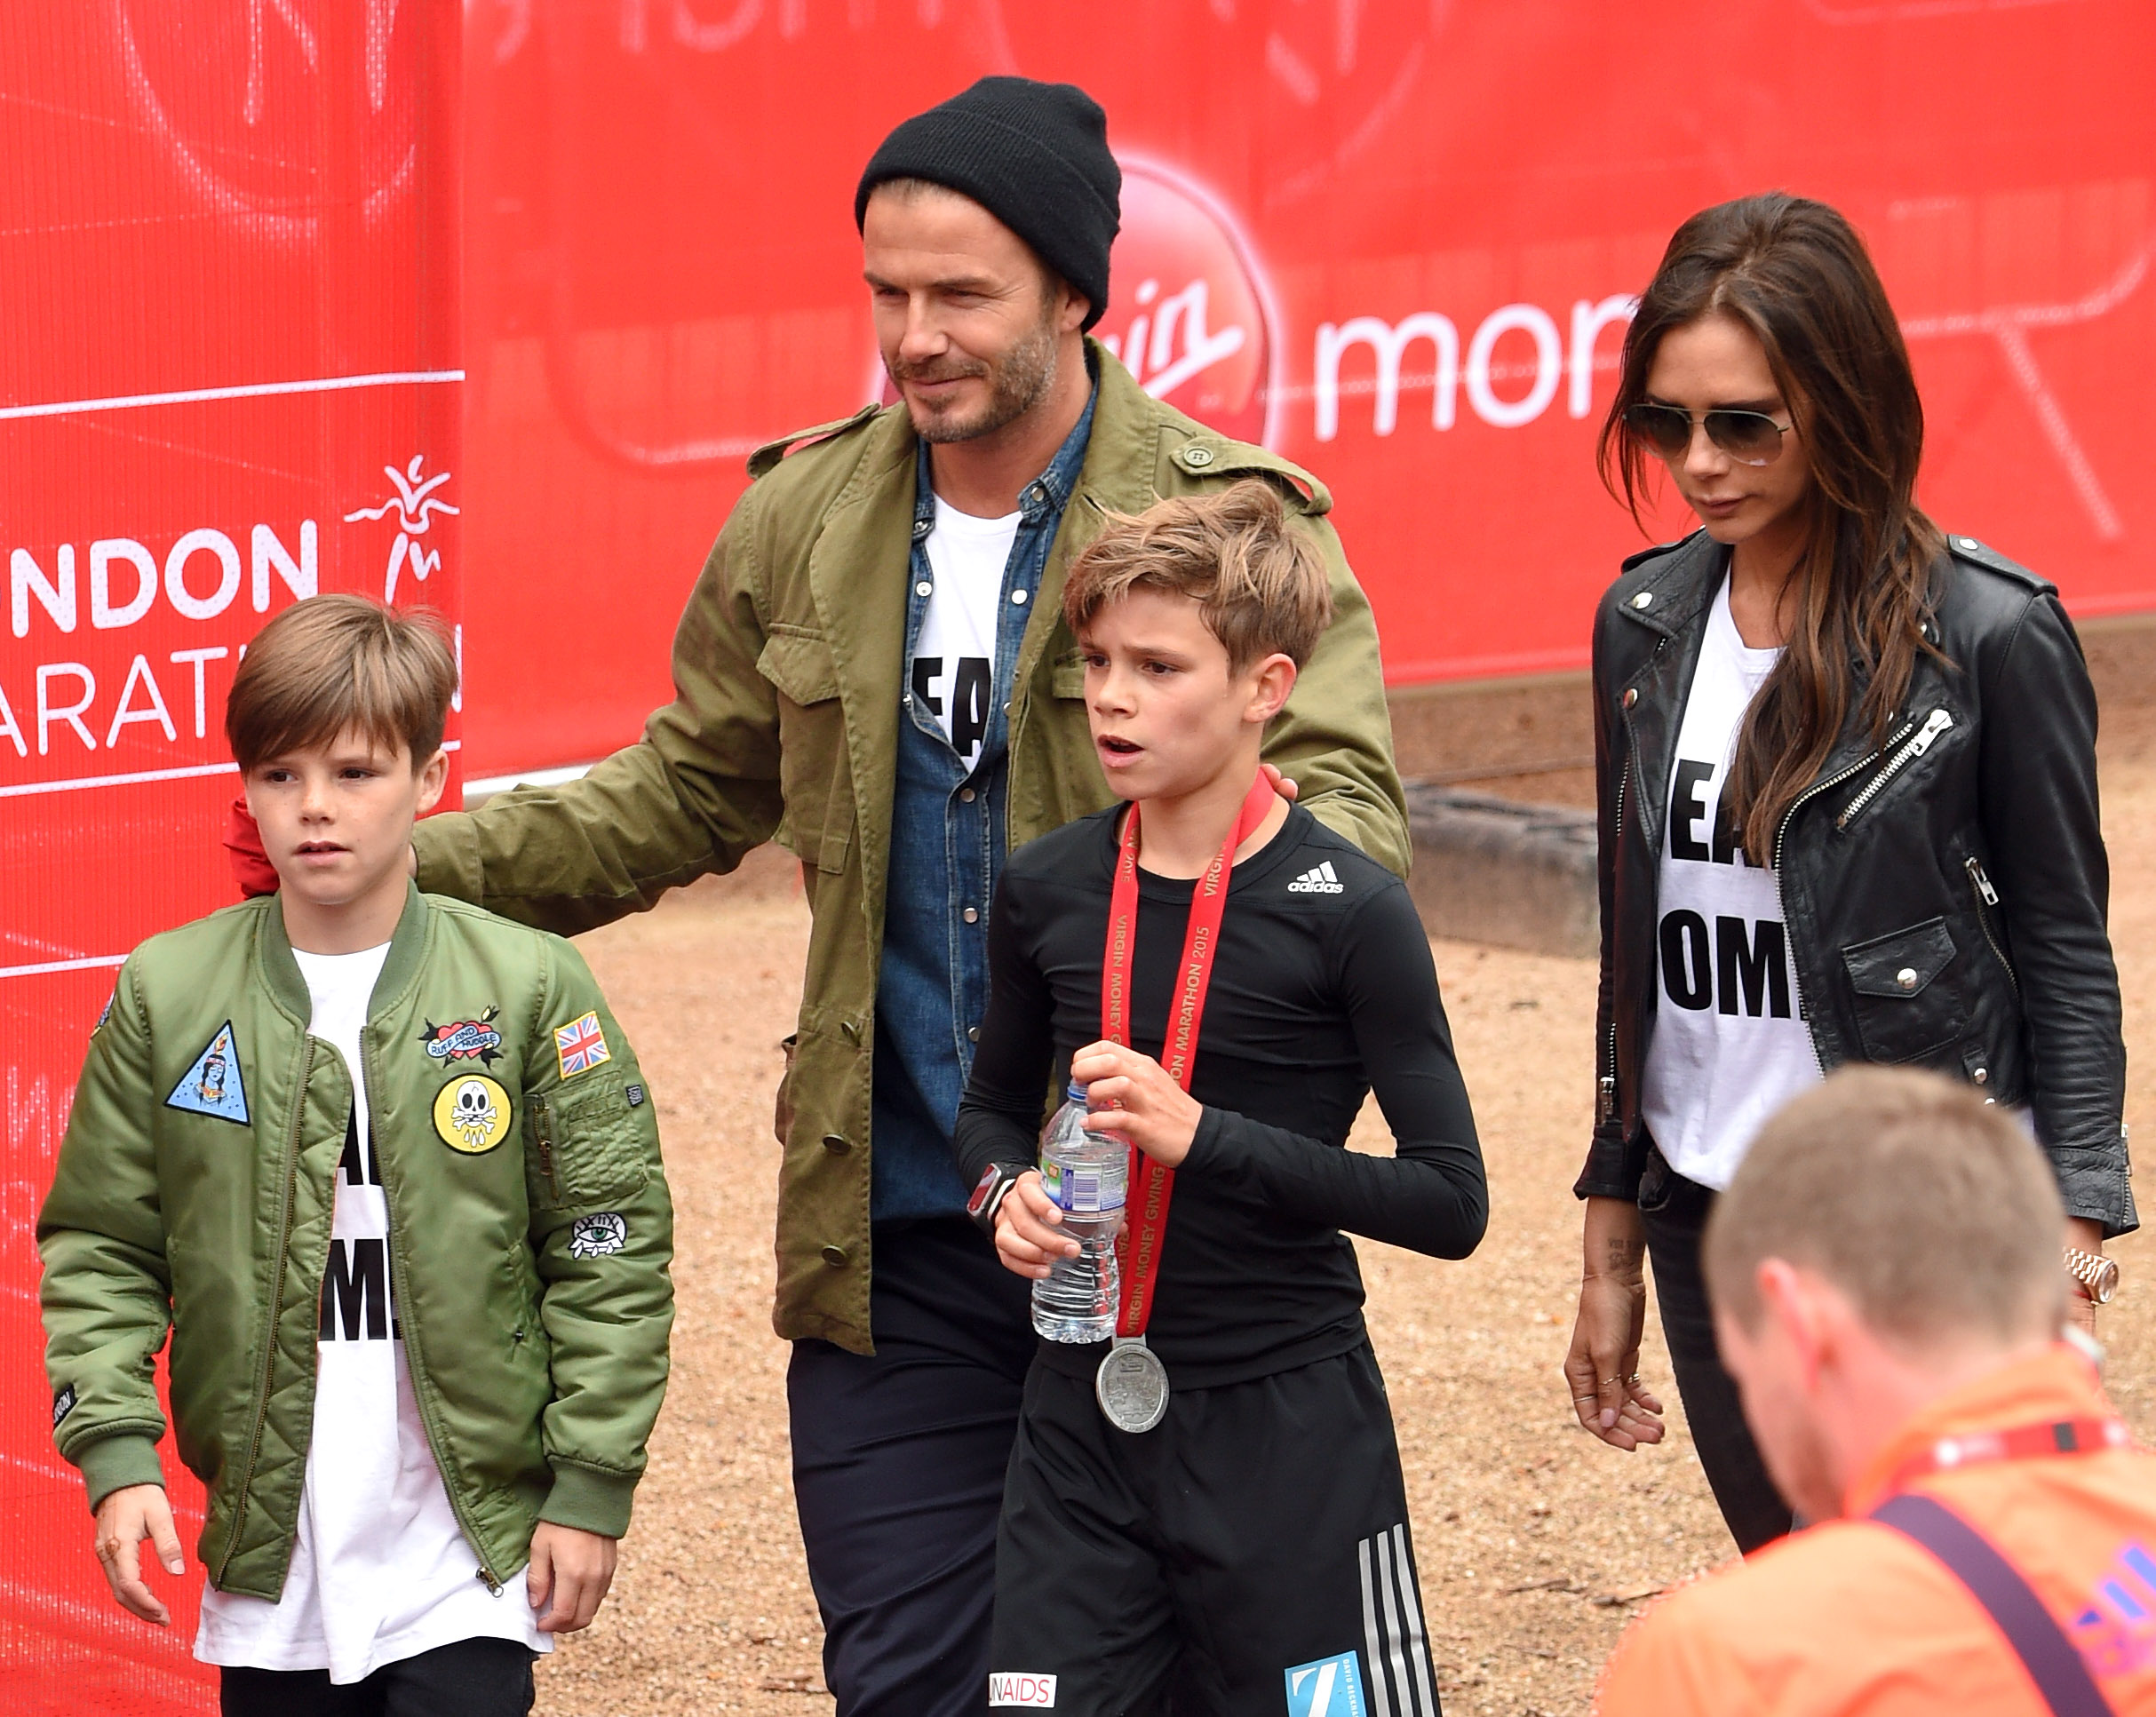 Cruz Beckham, David Beckham, Victoria Beckham and Romeo Beckham in London, England on April 26, 2015 | Source: Getty Images